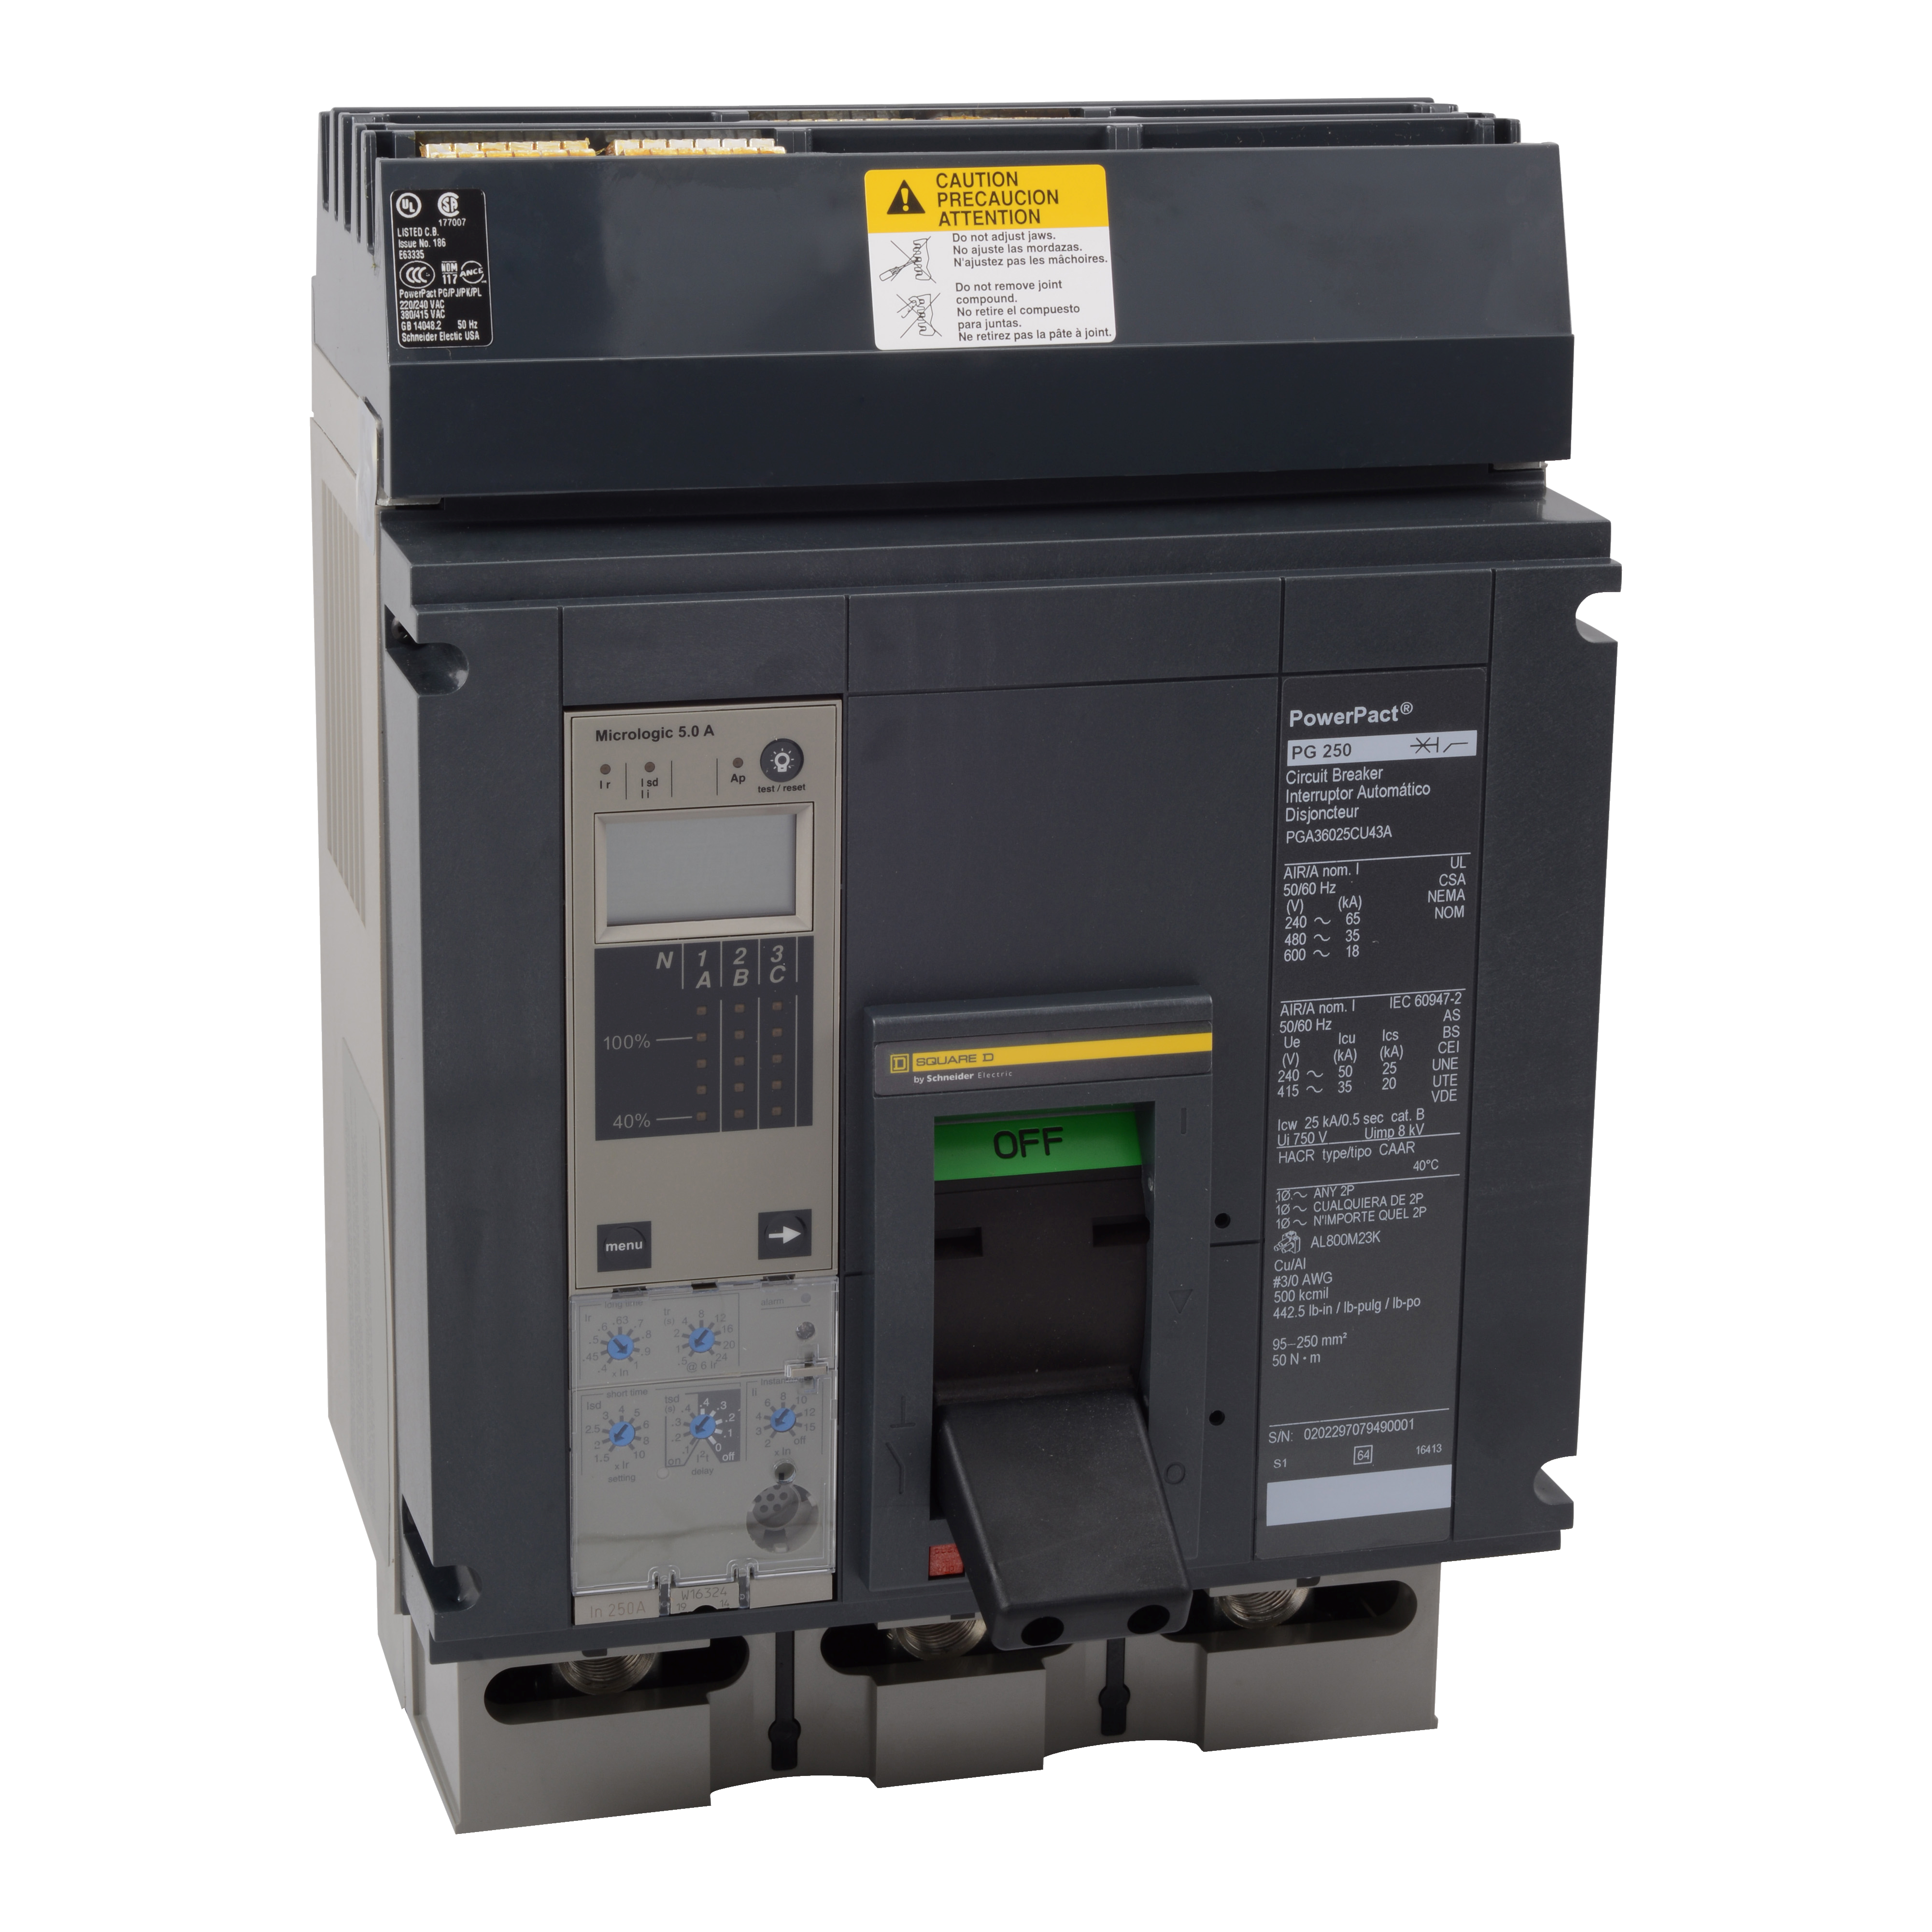 Circuit breaker, PowerPacT P, 600A, 3 pole, 600VAC, 18kA, I-Line, Micrologic 3.0, 100%, ABC